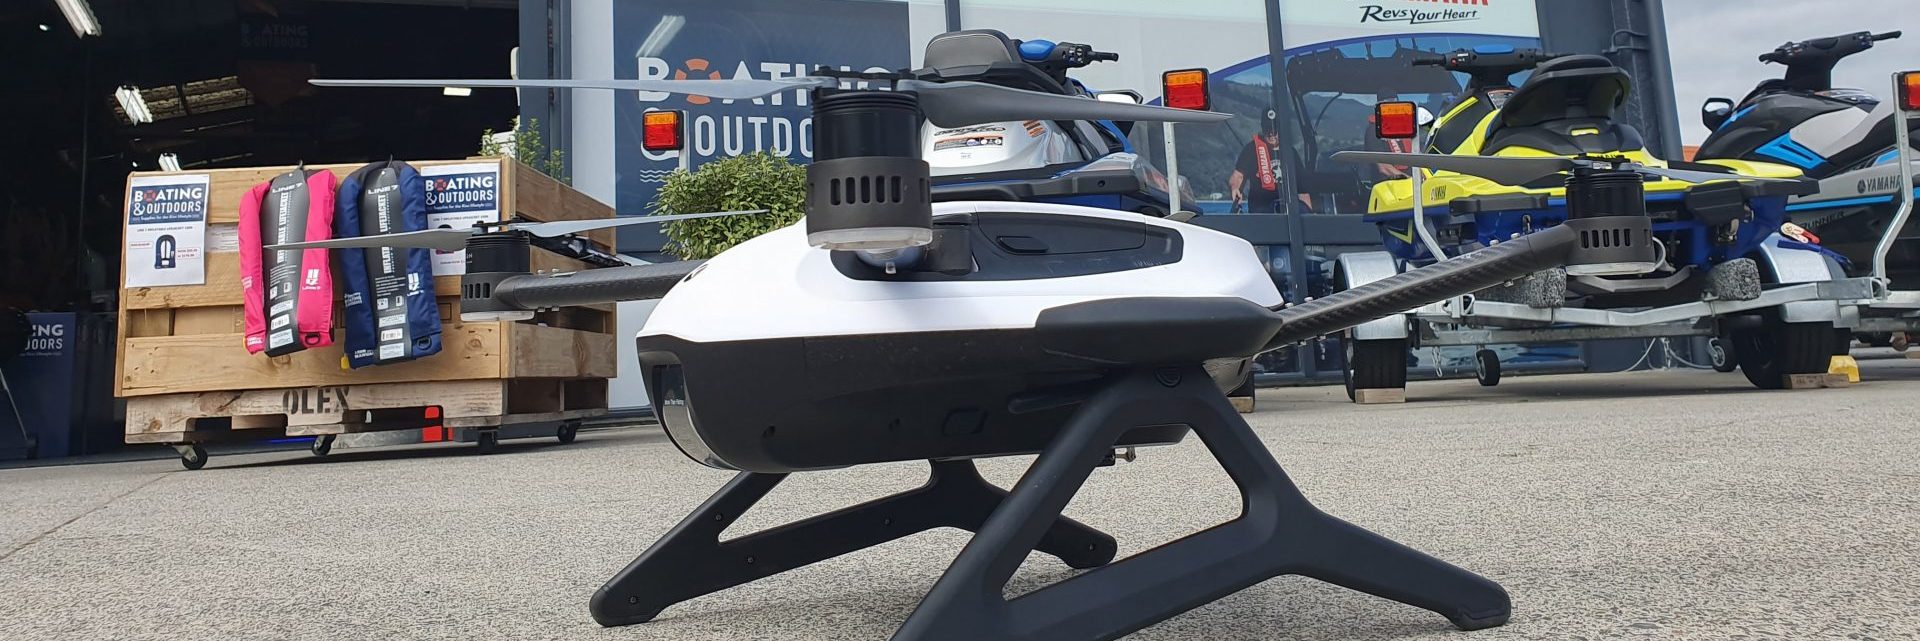 The Smart Fishing Drone - Trev Terry Marine Lake Taupo